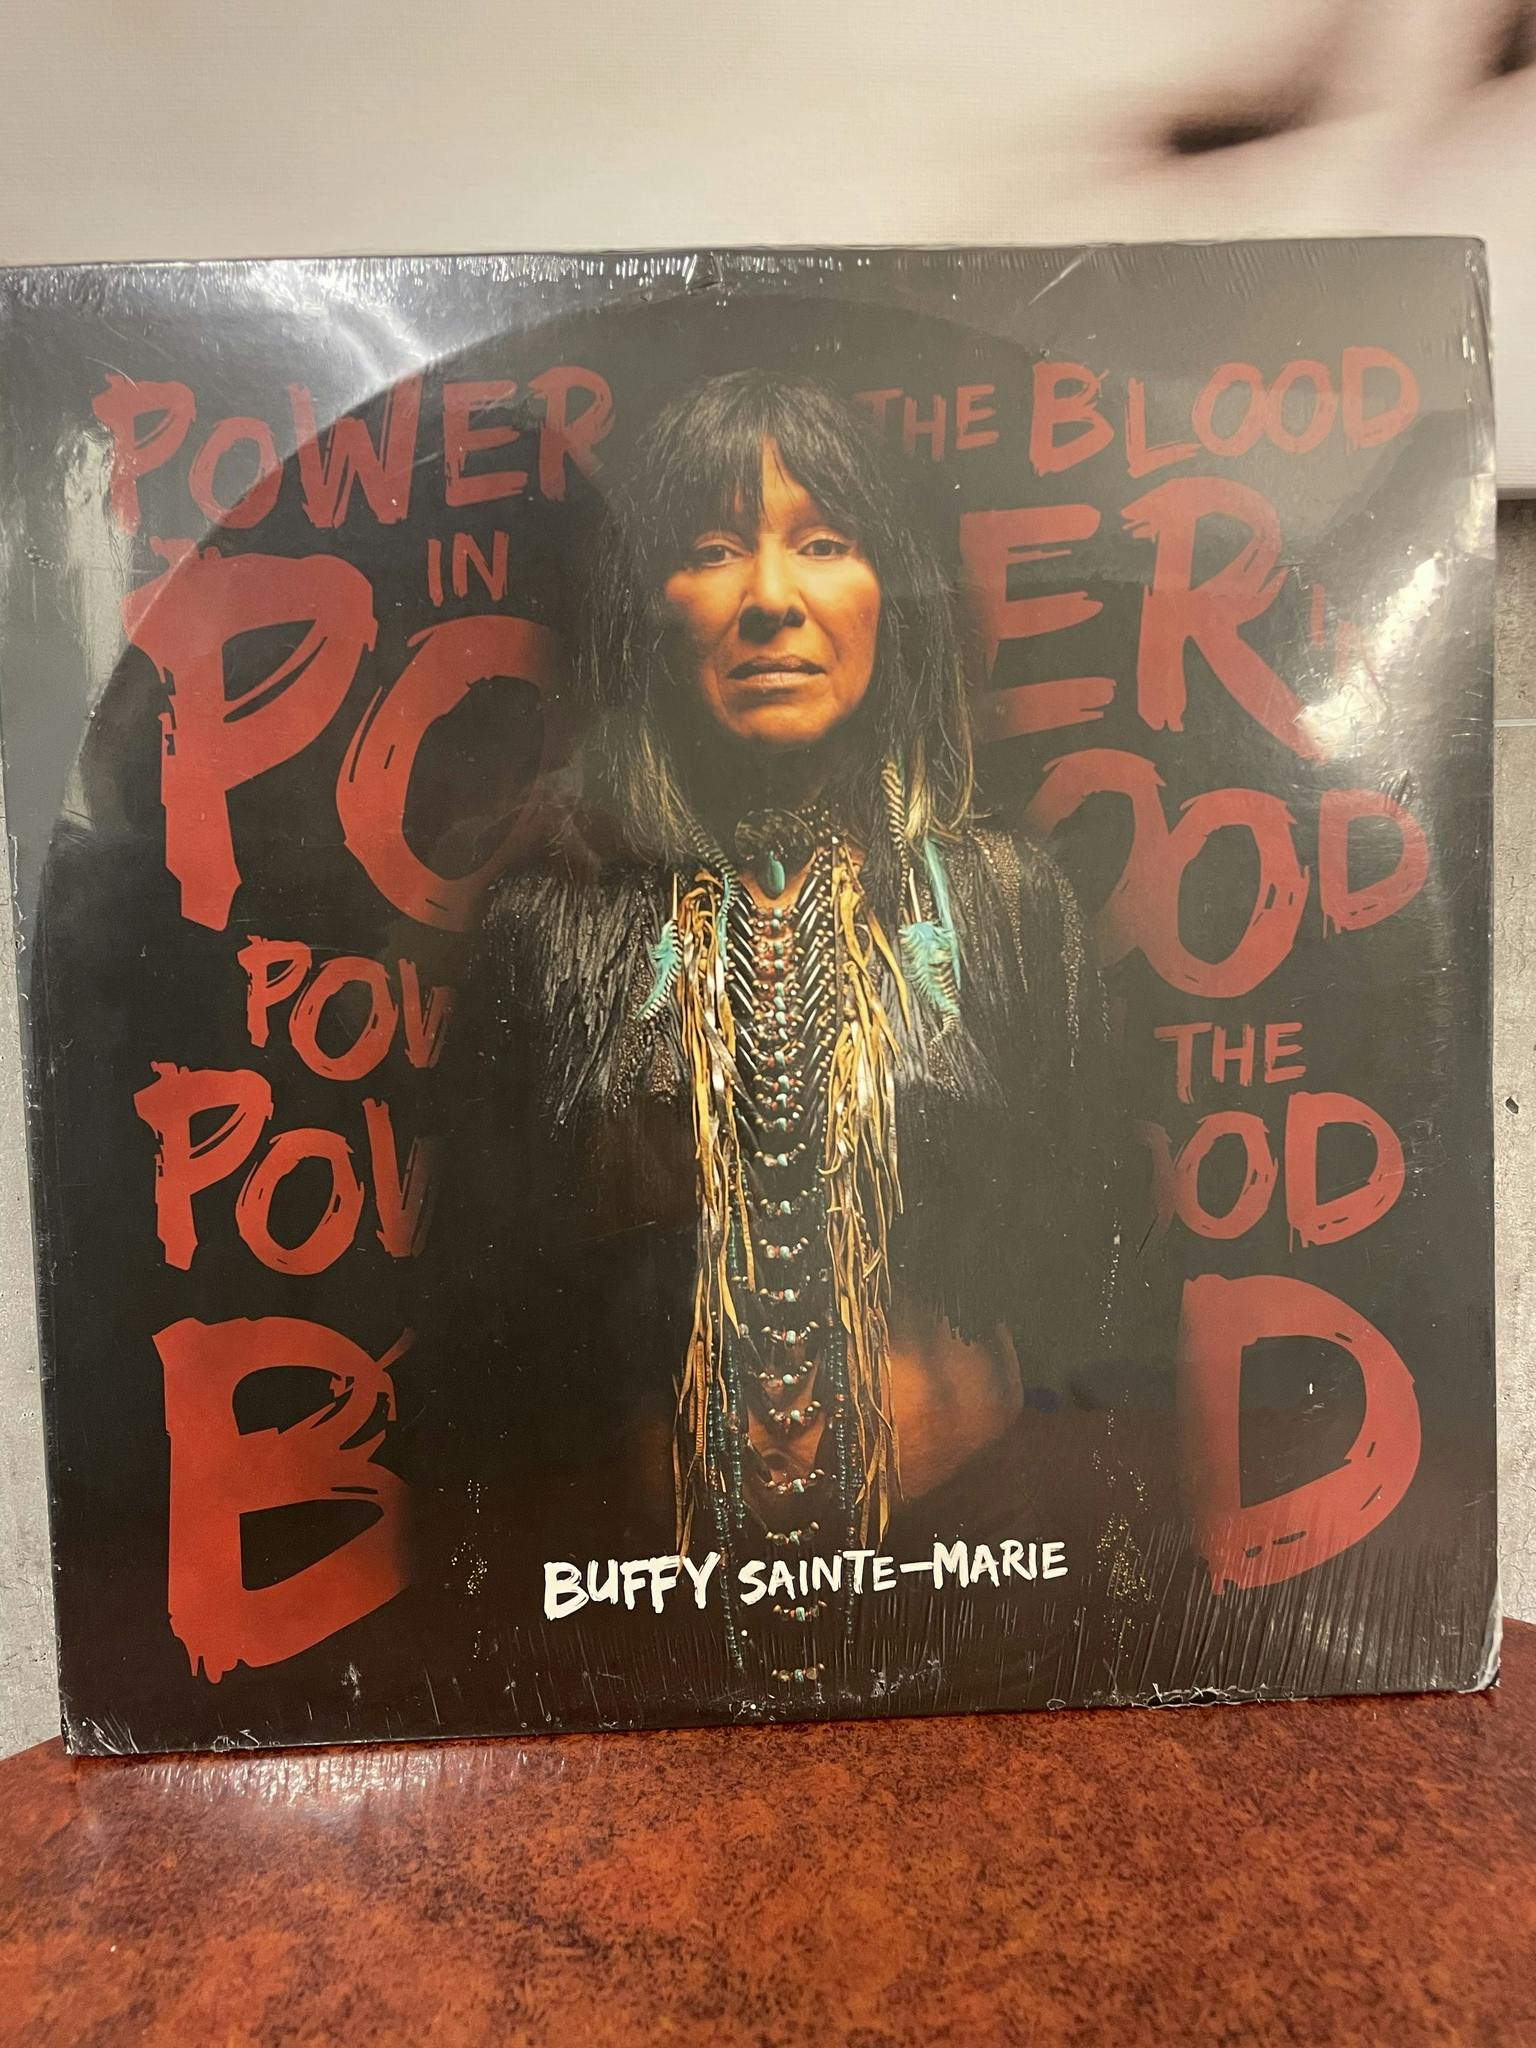 Buffy Sainte-Marie, "Power of the Blood" (LP)